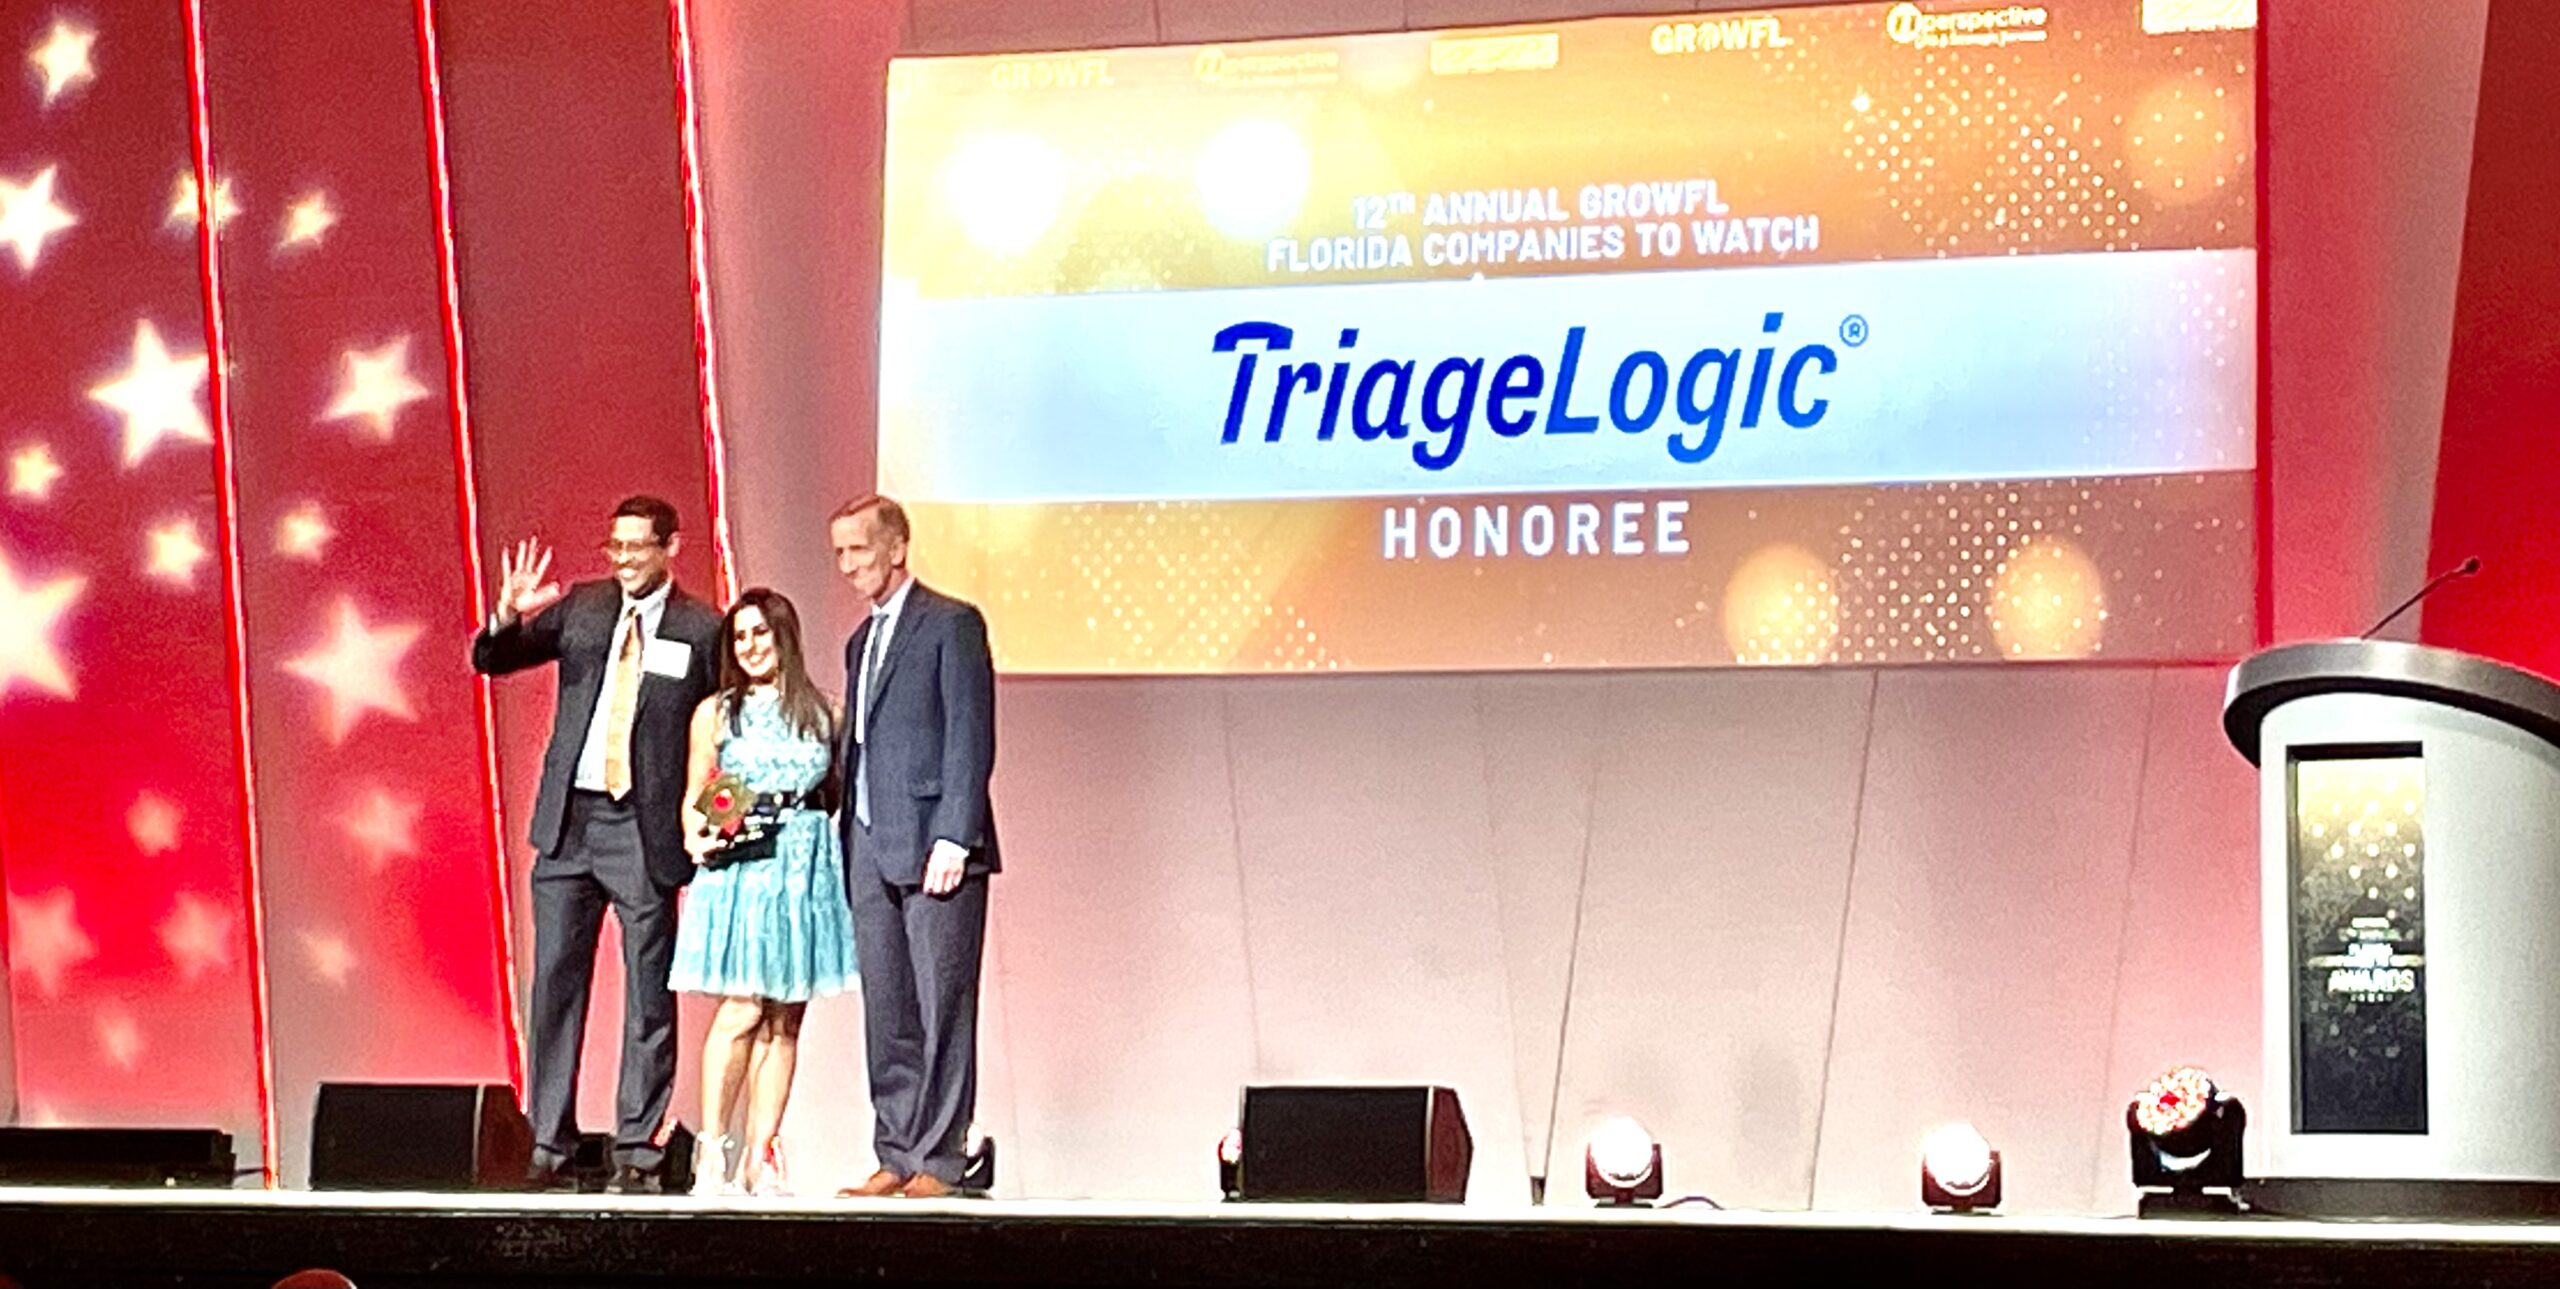 TriageLogic Drs. Ravi and Charu Raheja accept an award on stage at GrowFL.